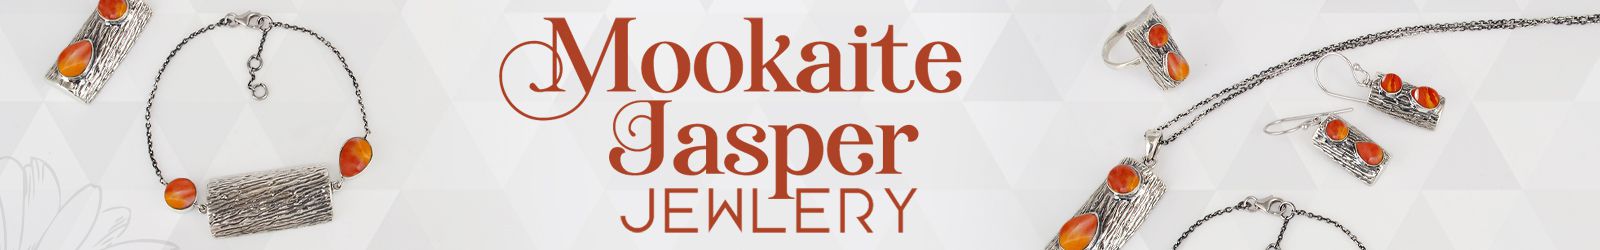 Silver Mookaite Jasper Jewelry Wholesale Supplier